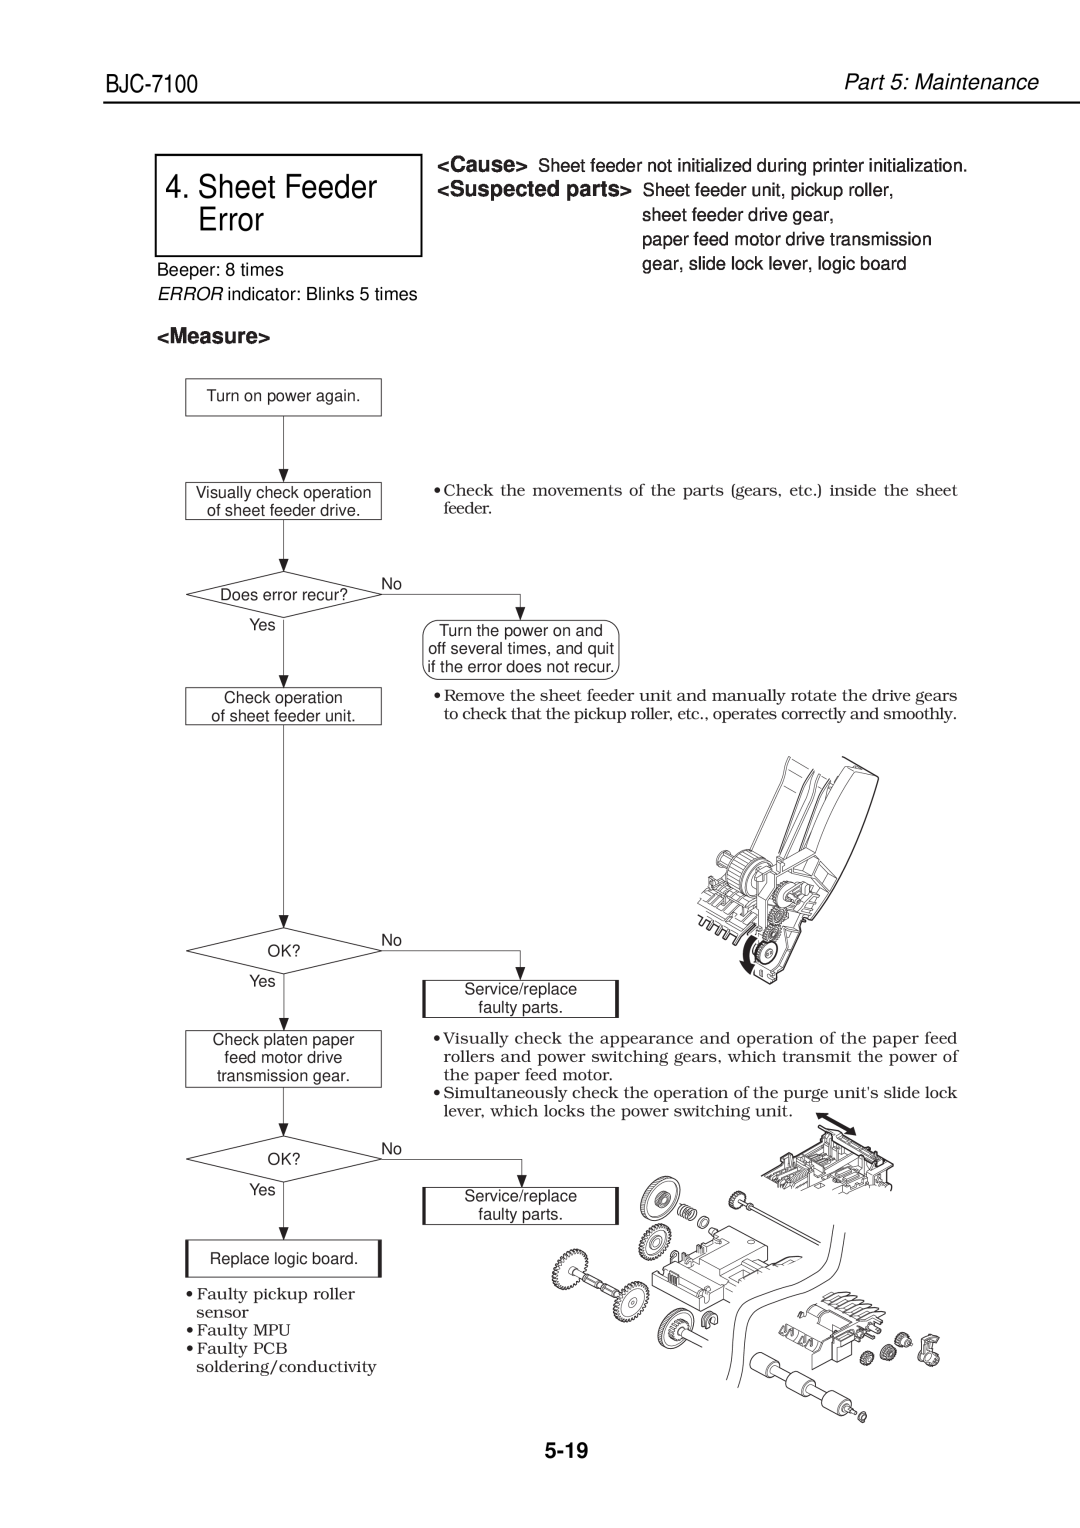 Canon QY8-1360-000 manual Sheet Feeder Error, 5-19, BJC-7100, Part 5 Maintenance, Measure 